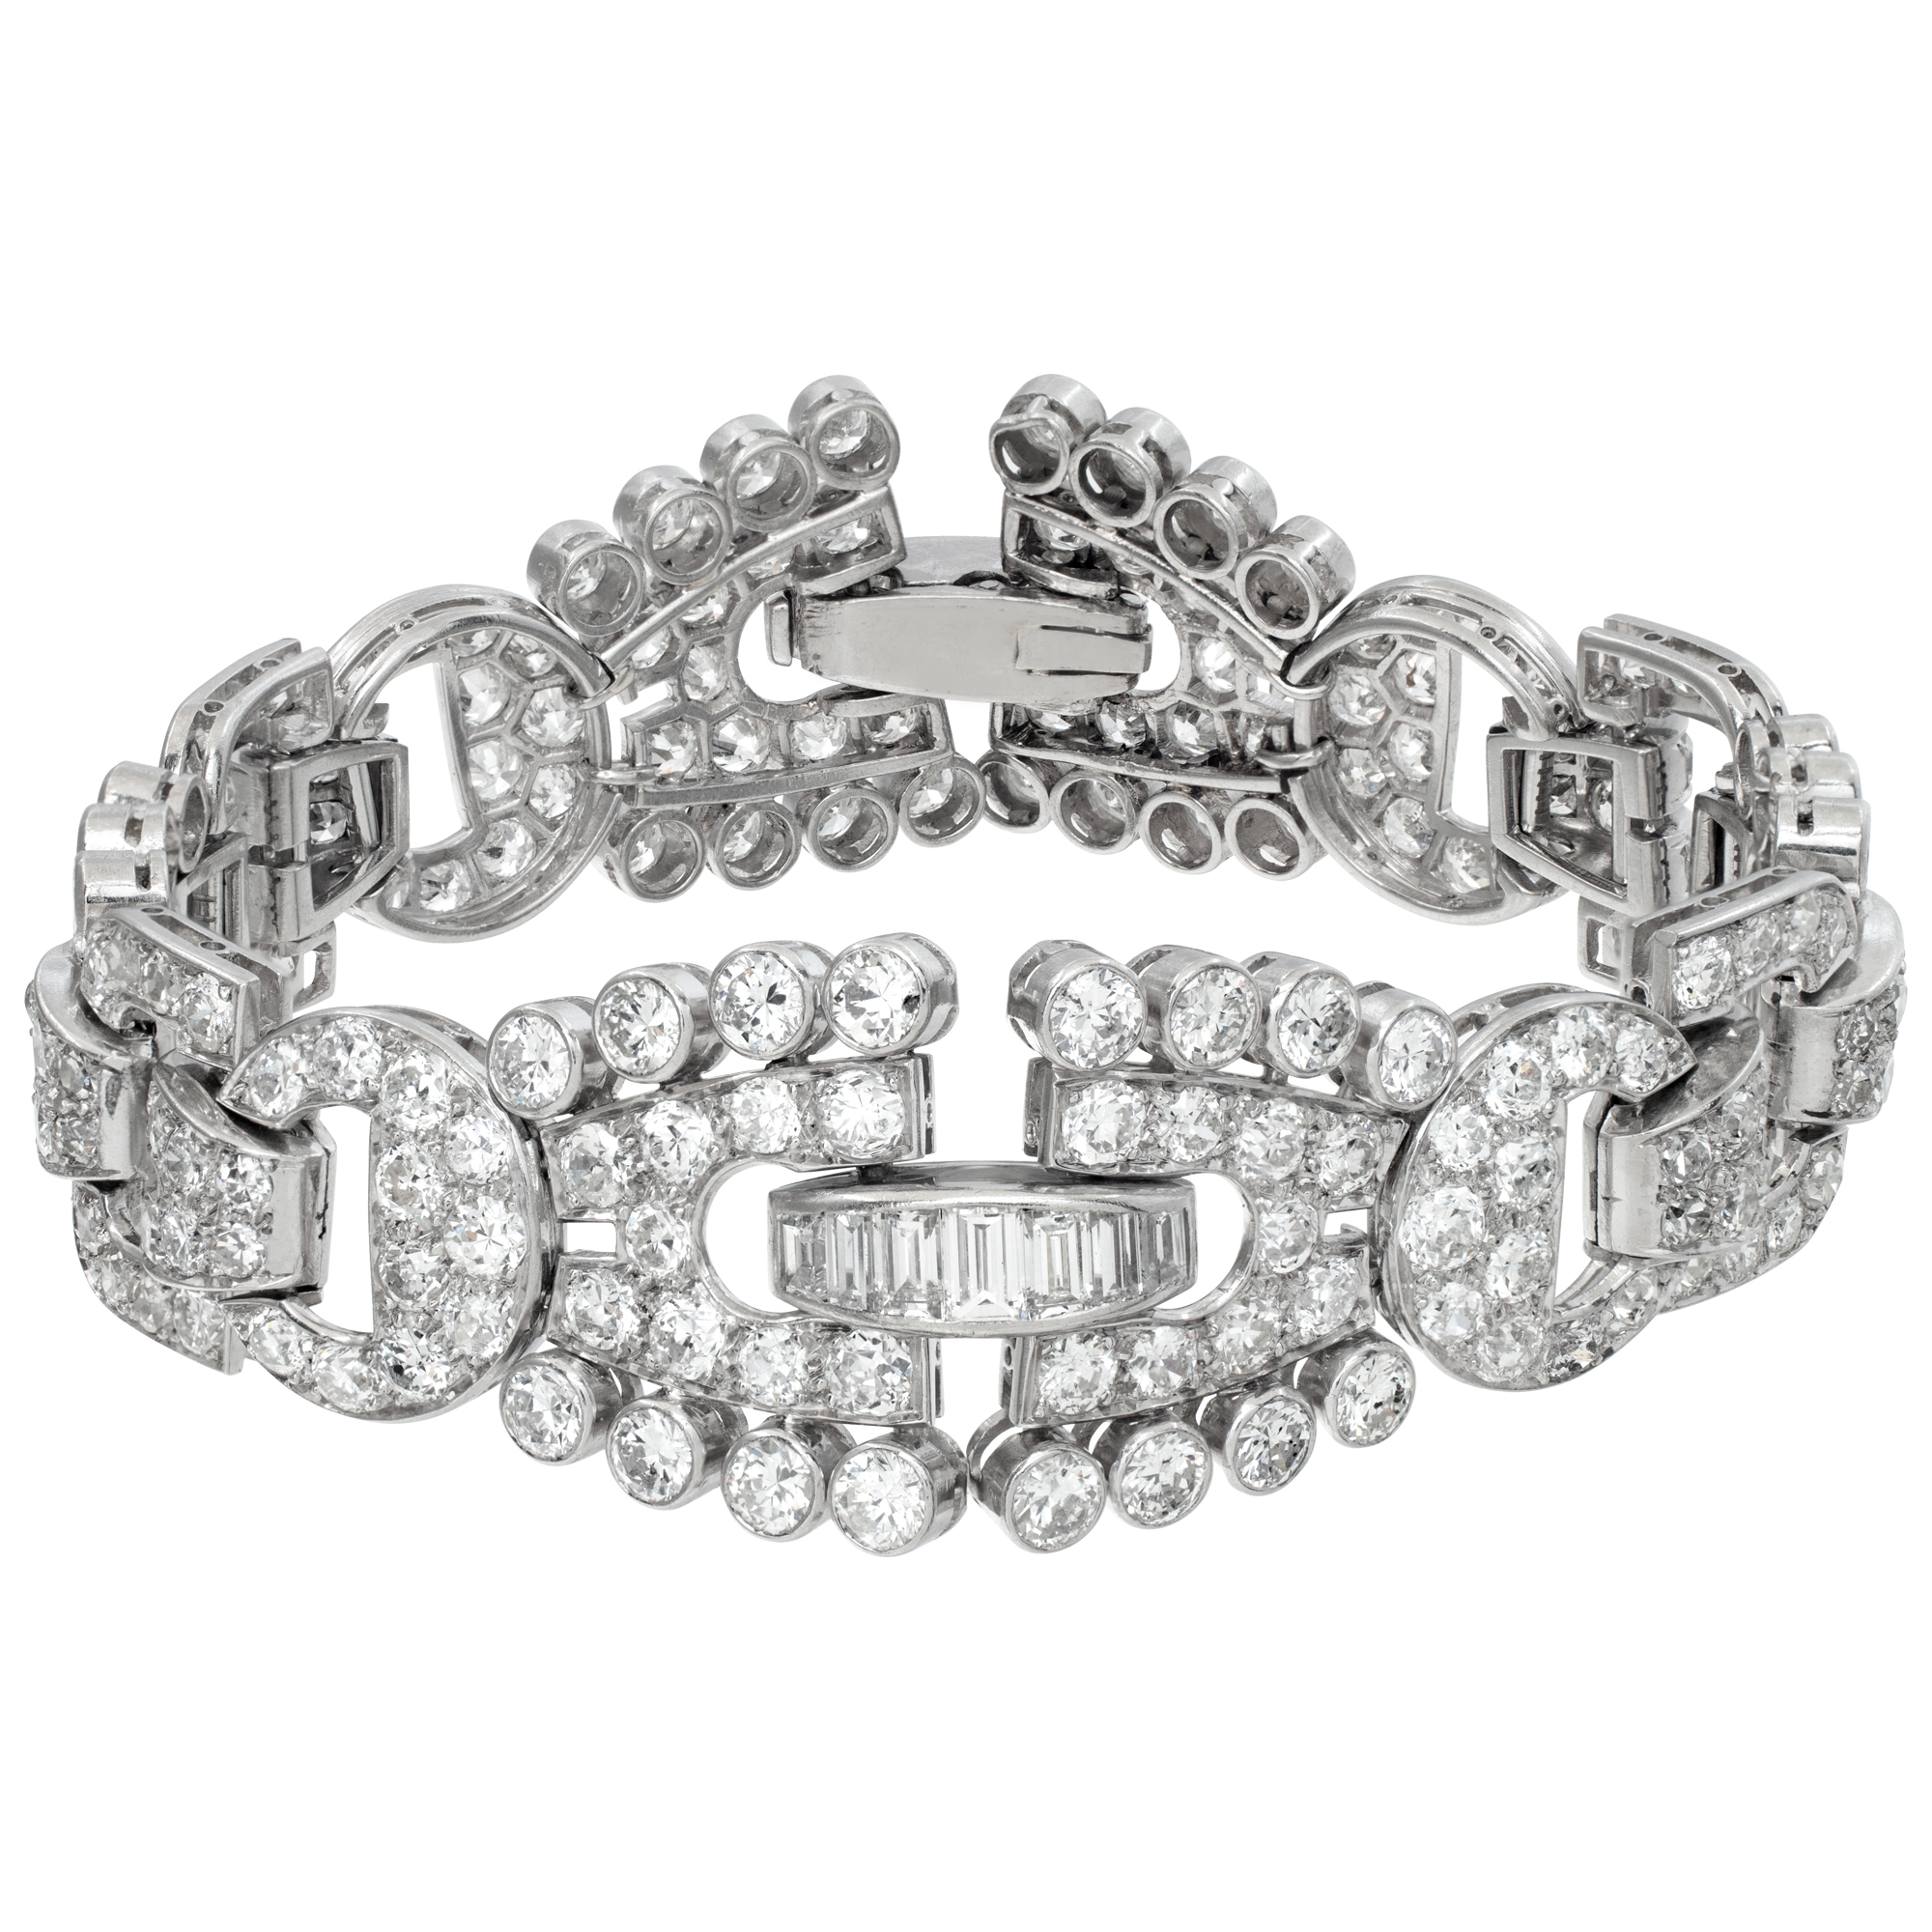 Art deco round brilliant and baguettes cut diamonds bracelet set in Platinum. Over 12 carats Round & baguettes cut diamonds